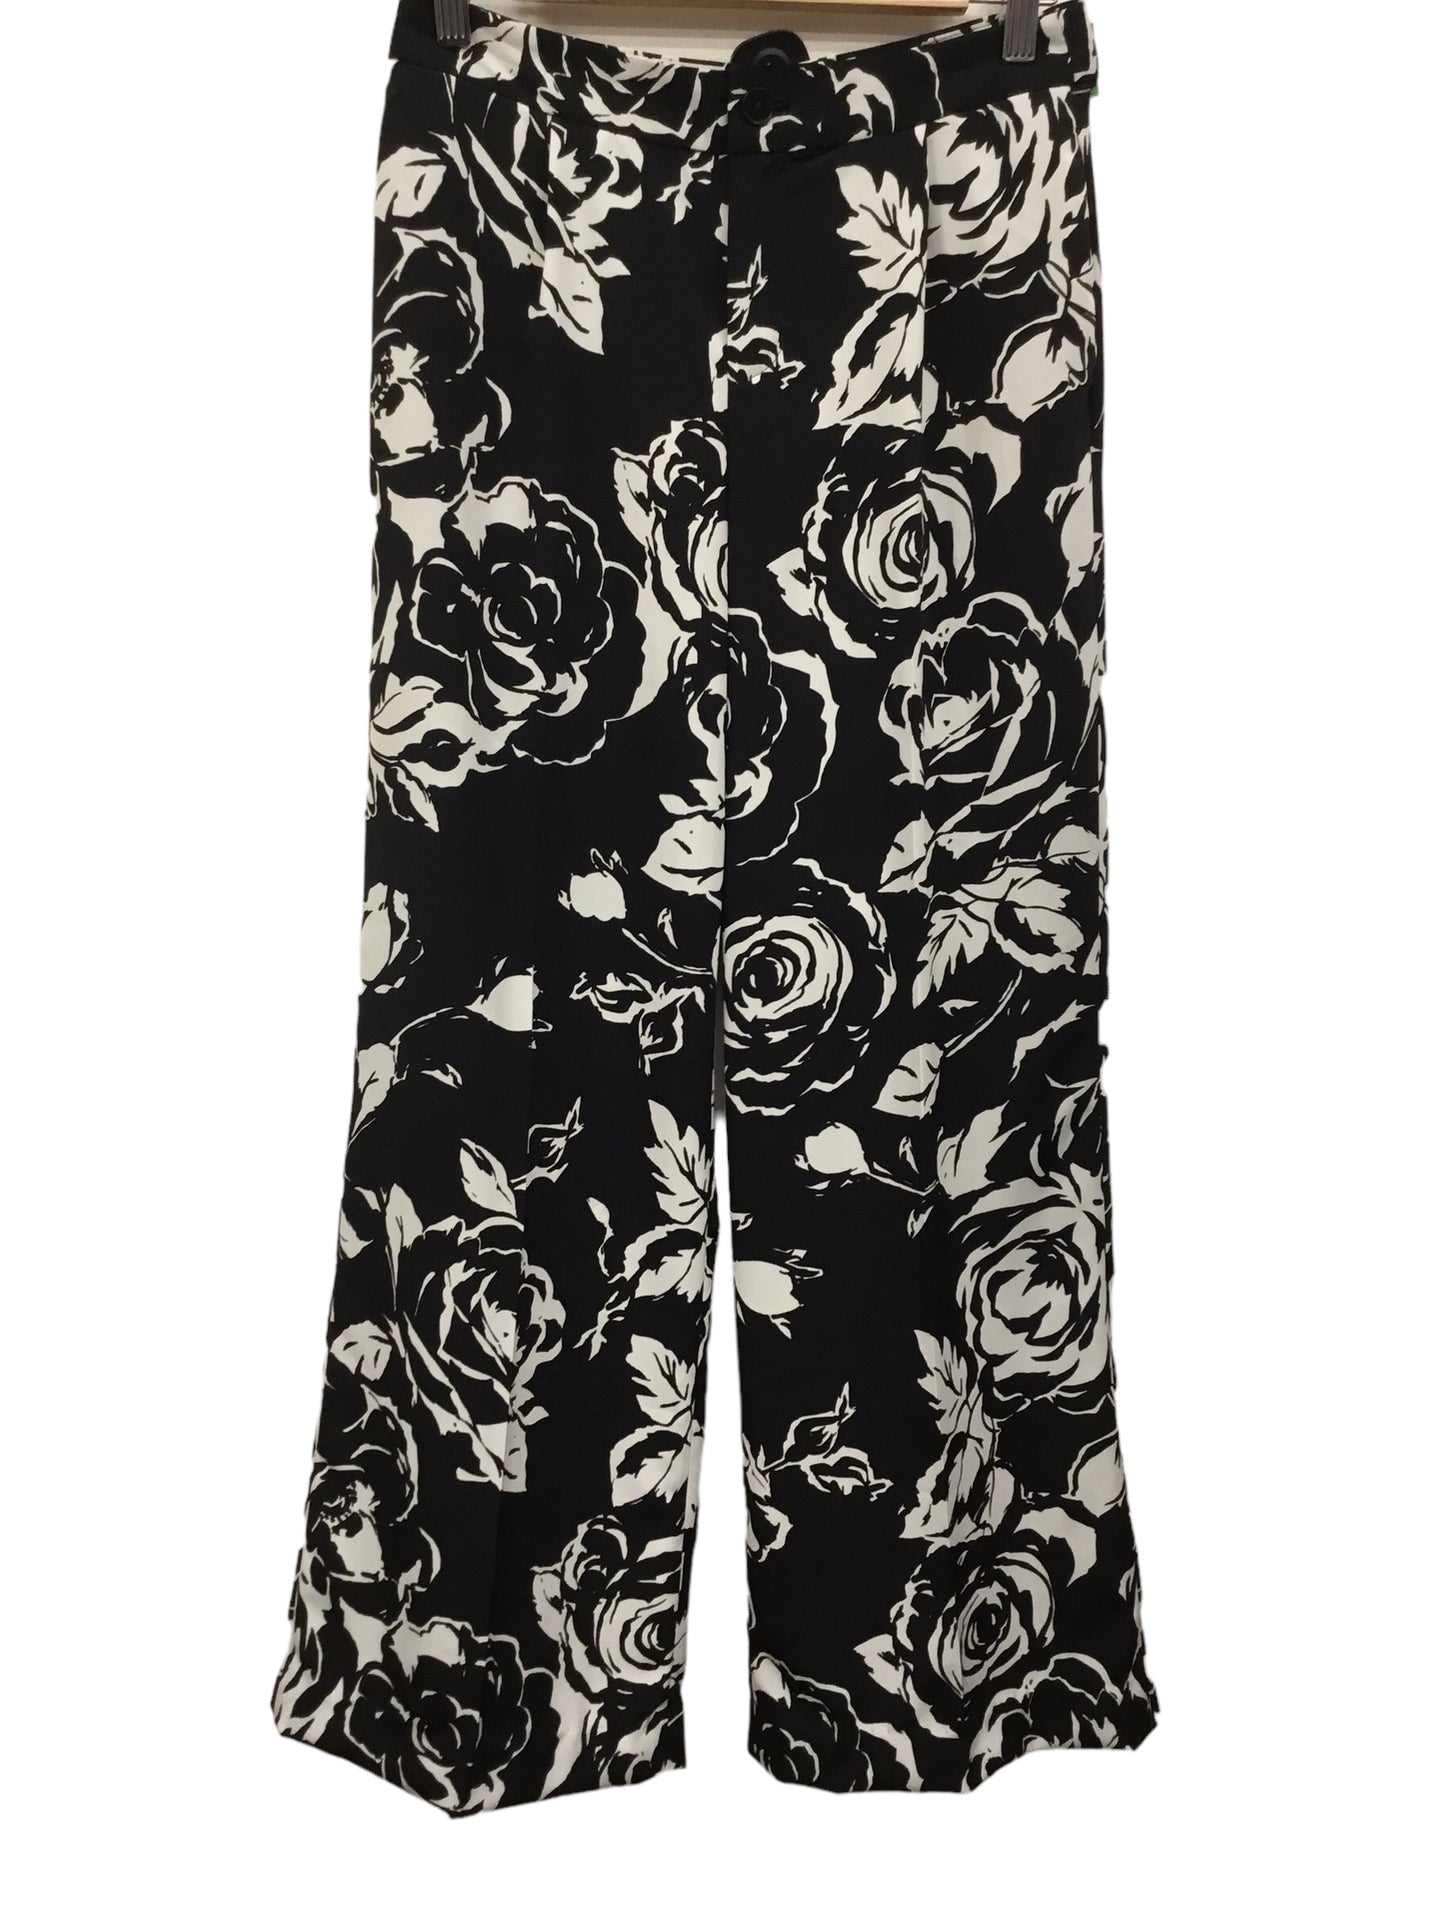 Pants Dress By Lauren By Ralph Lauren  Size: 2